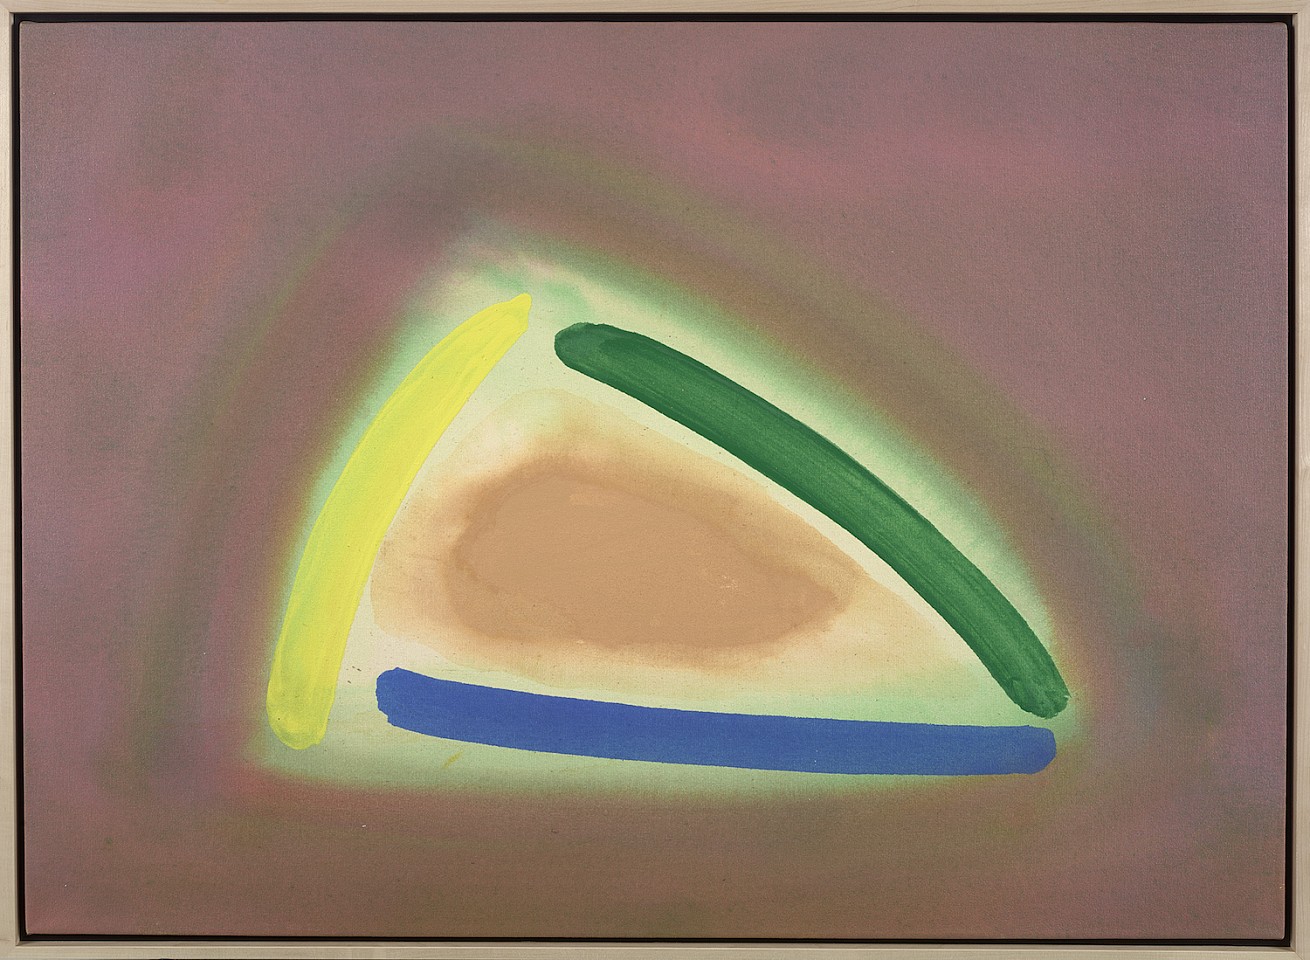 William Perehudoff, AC-87-70 | SOLD, 1987
Acrylic on canvas, 32 1/8 x 44 1/8 in. (81.6 x 112.1 cm)
PER-00084